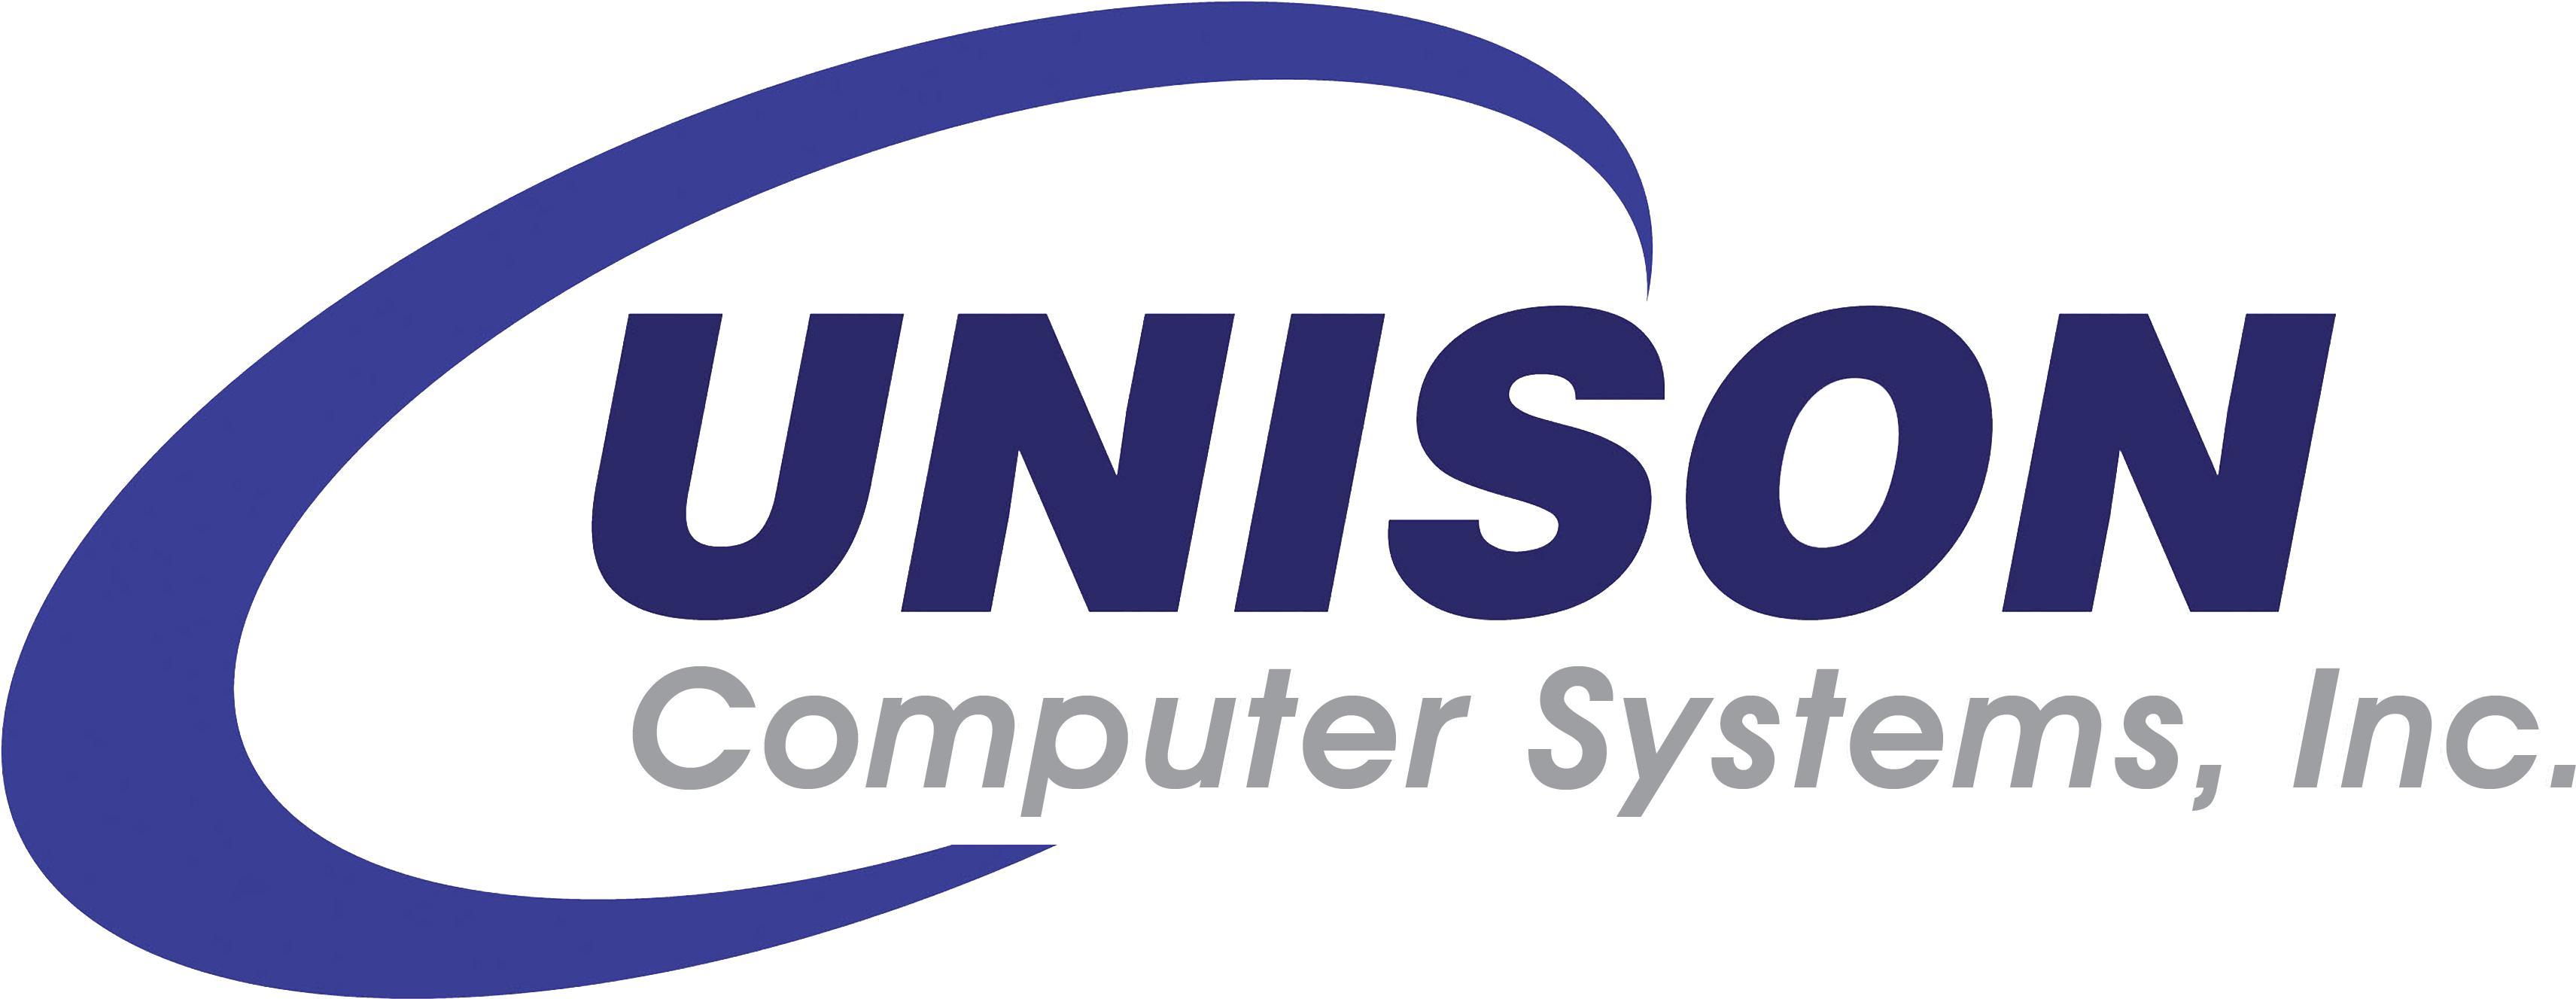 Unison Computer Systems Inc (3600x1437)